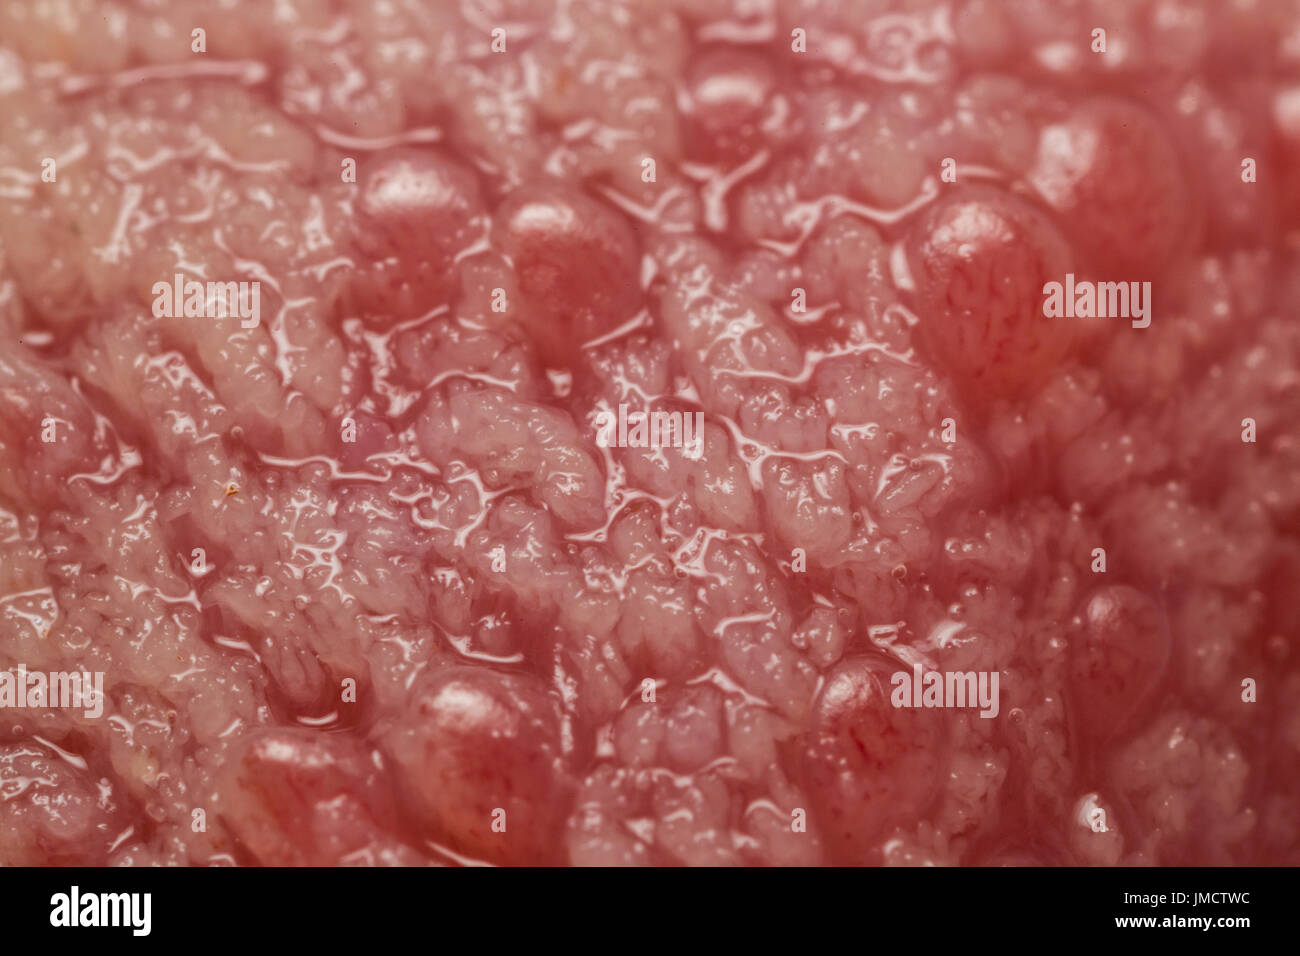 Foto macro di papille gustative sulla lingua umana Foto Stock